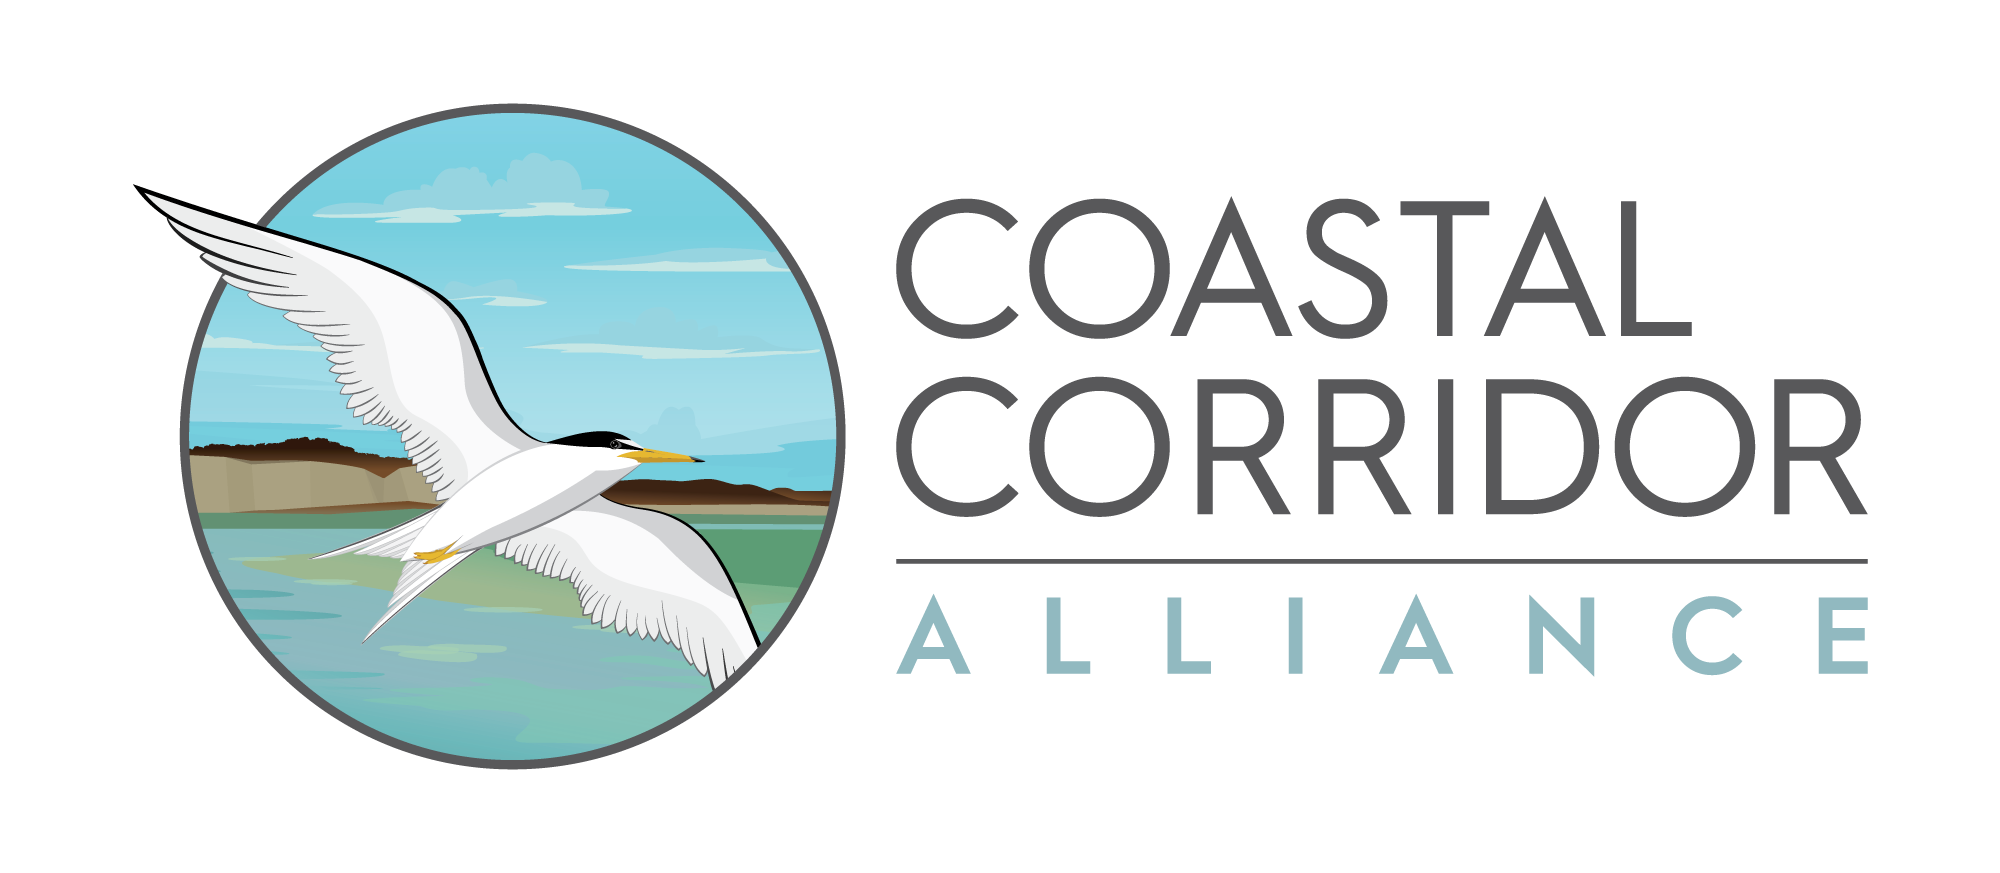 Coastal Corridor Alliance